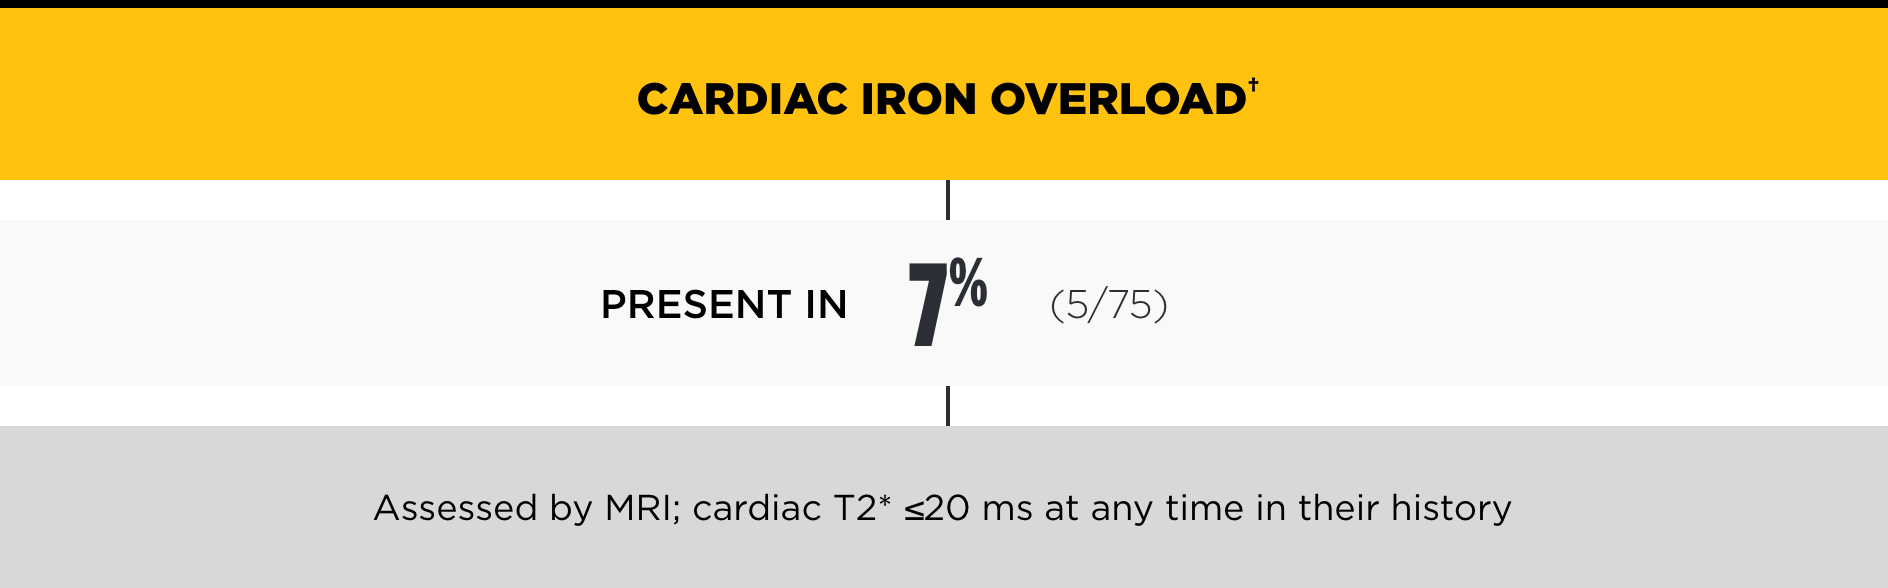 Cardiac Iron Overload